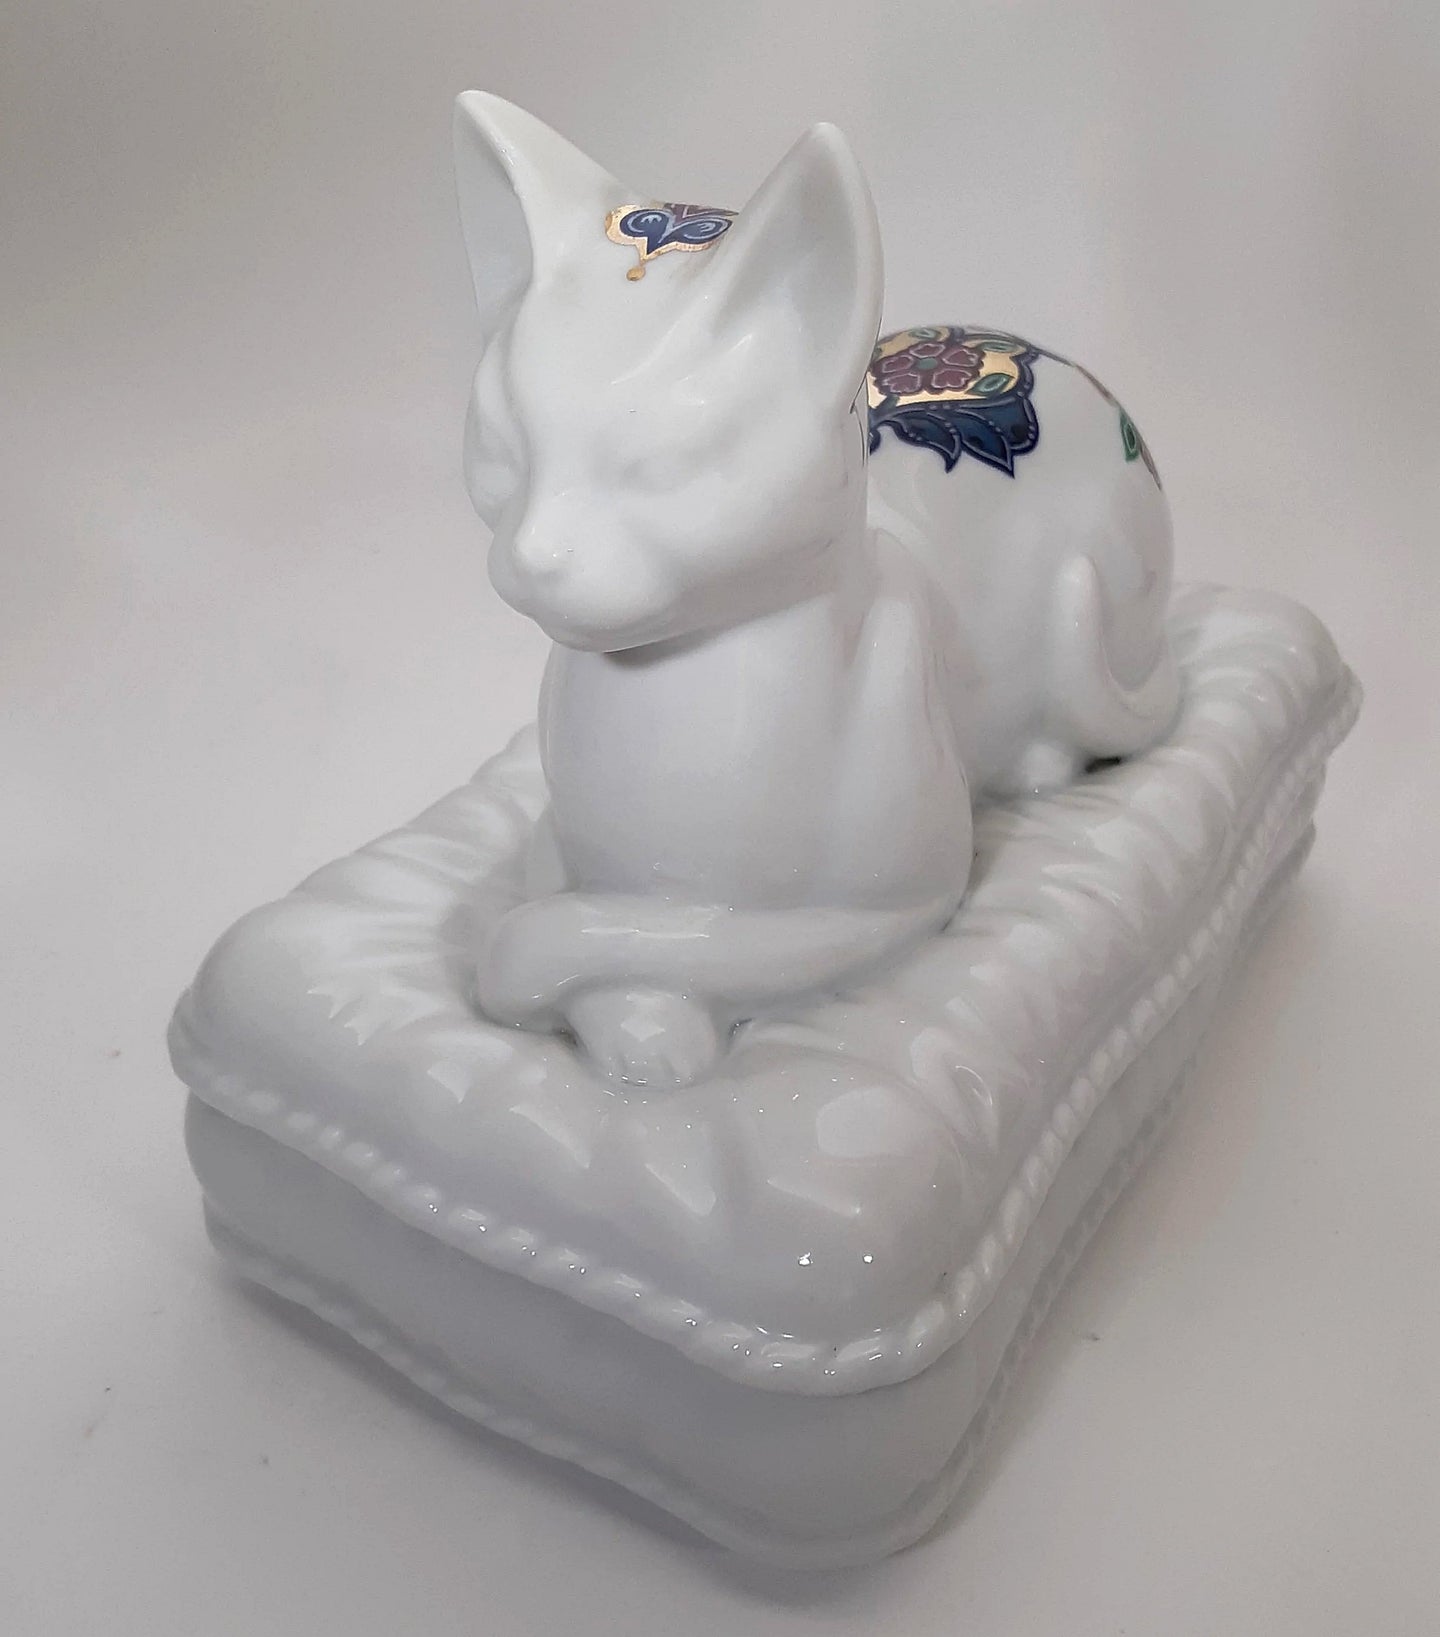 Elizabeth Arden Byzantium Porcelain Royal Cat Figurine Vanity/ Trinket Box. c.1980